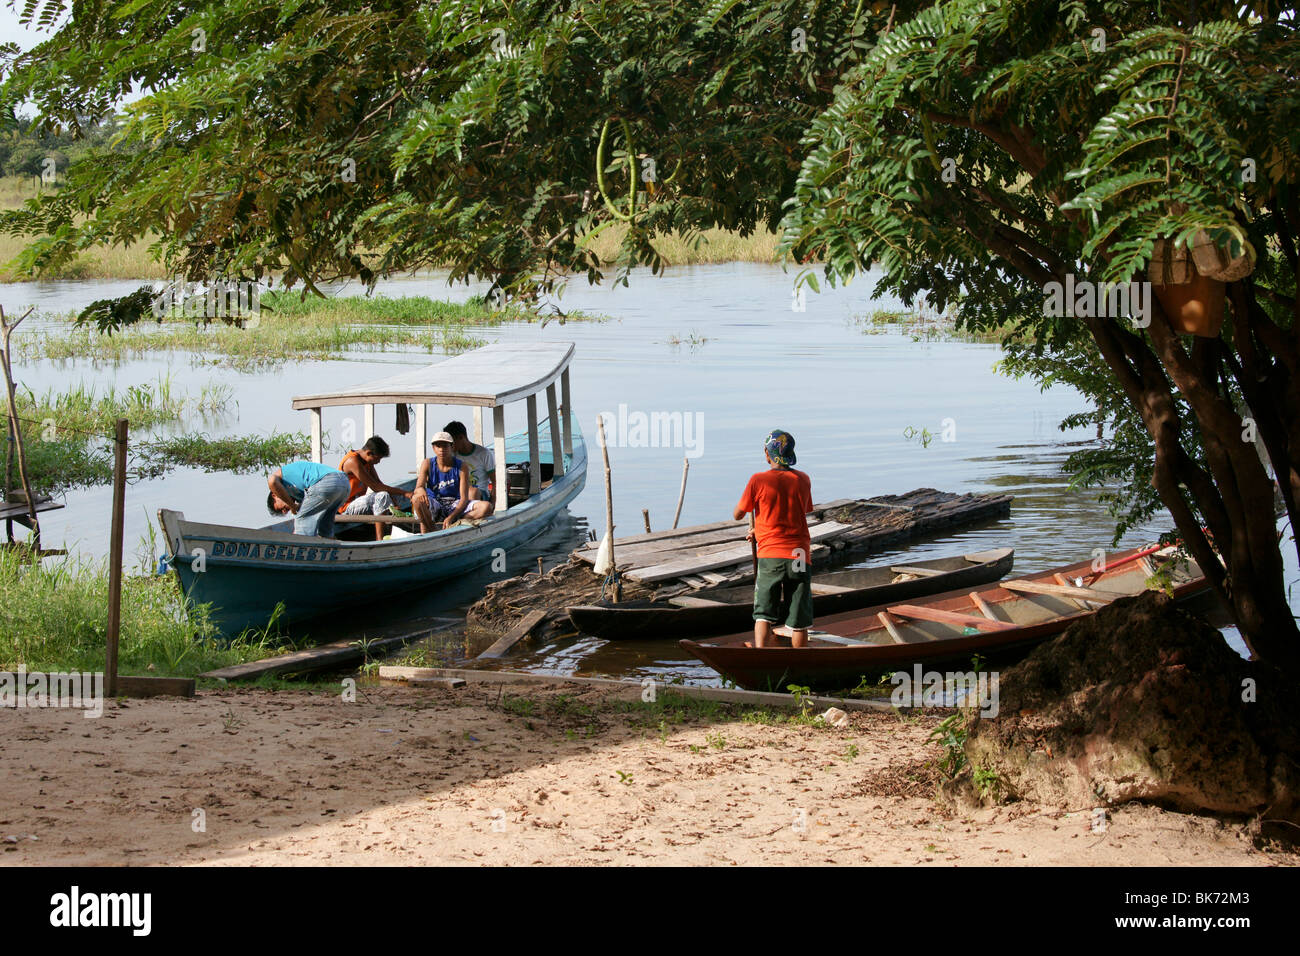 Amazonas - Ureinwohner mit Booten. Stockfoto